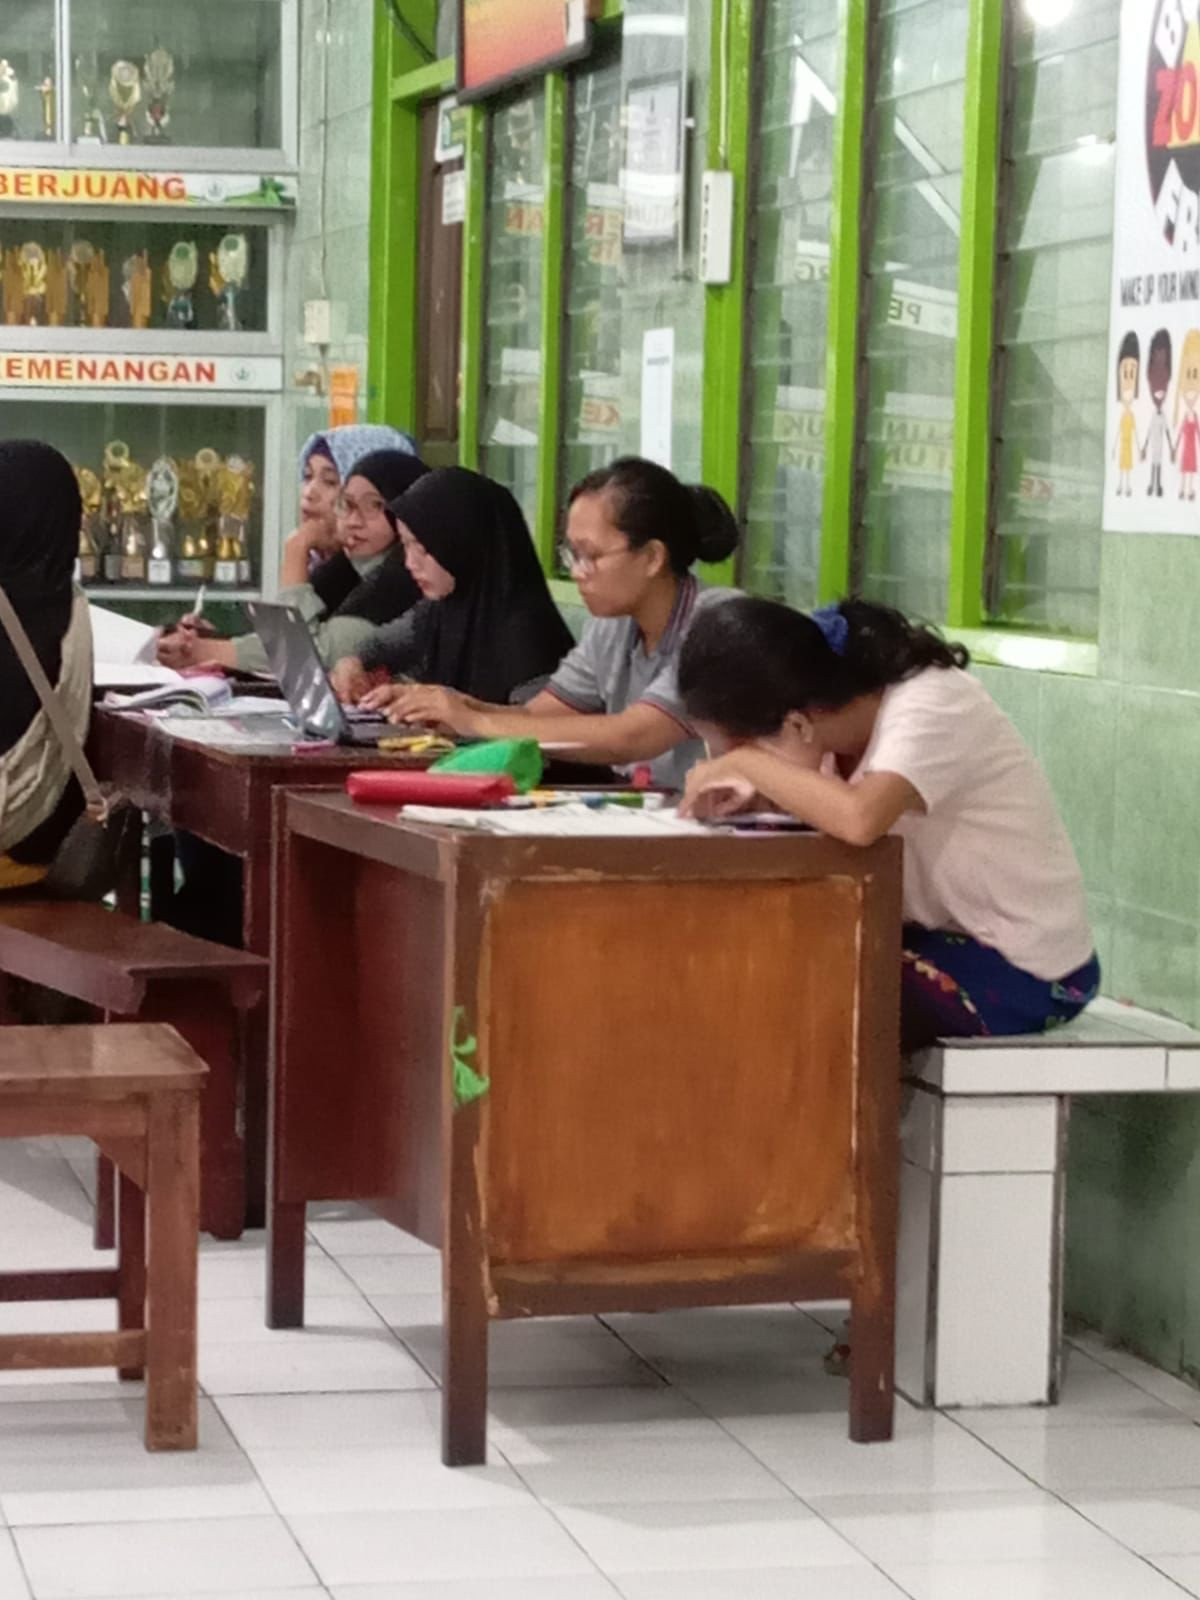 pembuatan Kartu Indonesia Sehat Goes To Banjar